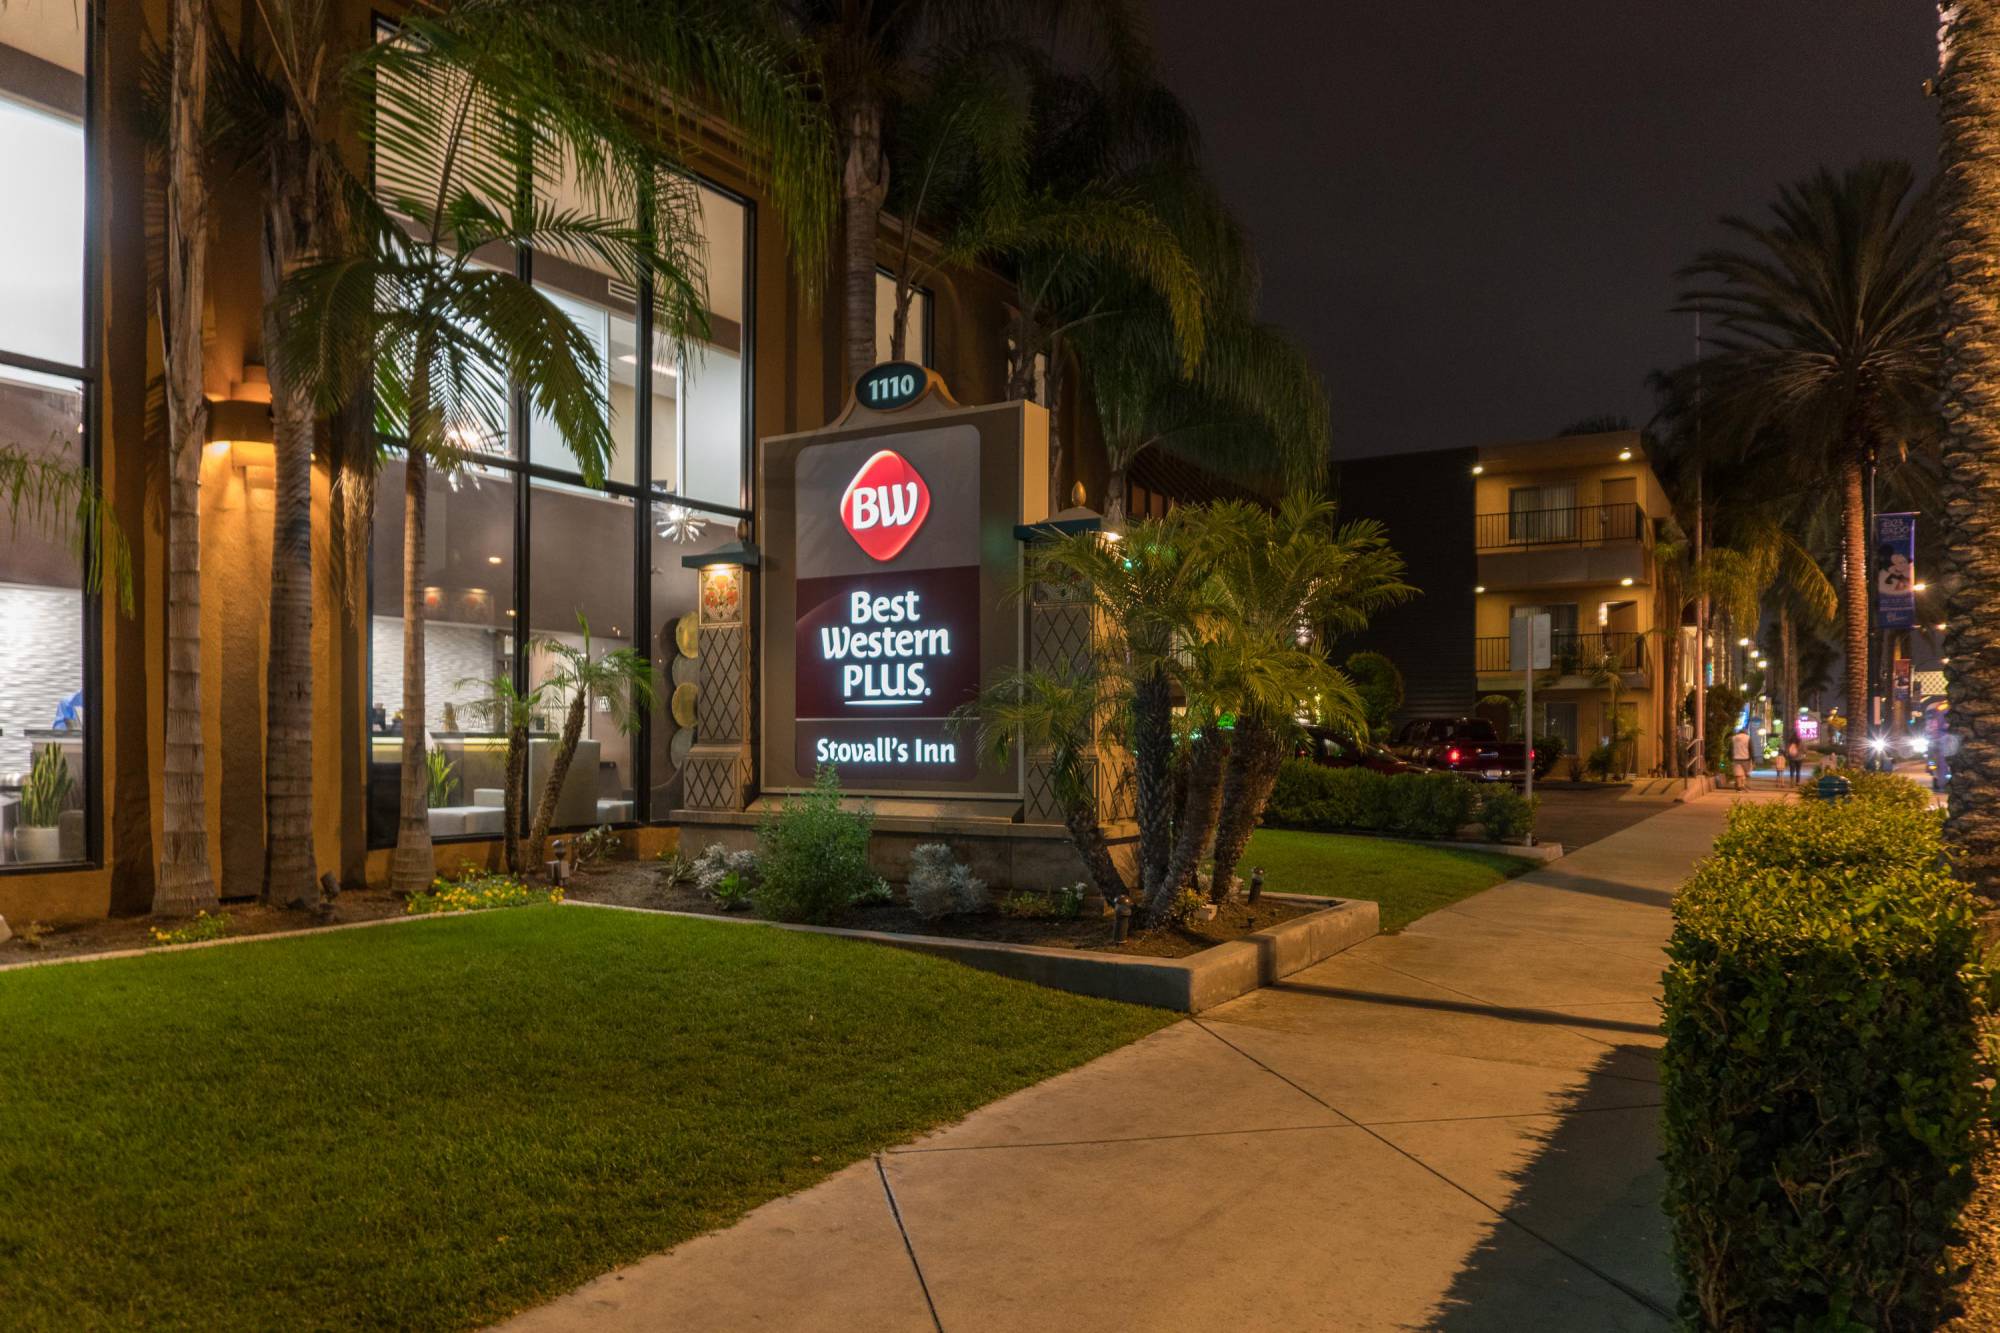 Enjoy the convenience of the Disneyland Good Neighbor Hotel - the Best Western Plus Stovall's Inn | PassPorter.com